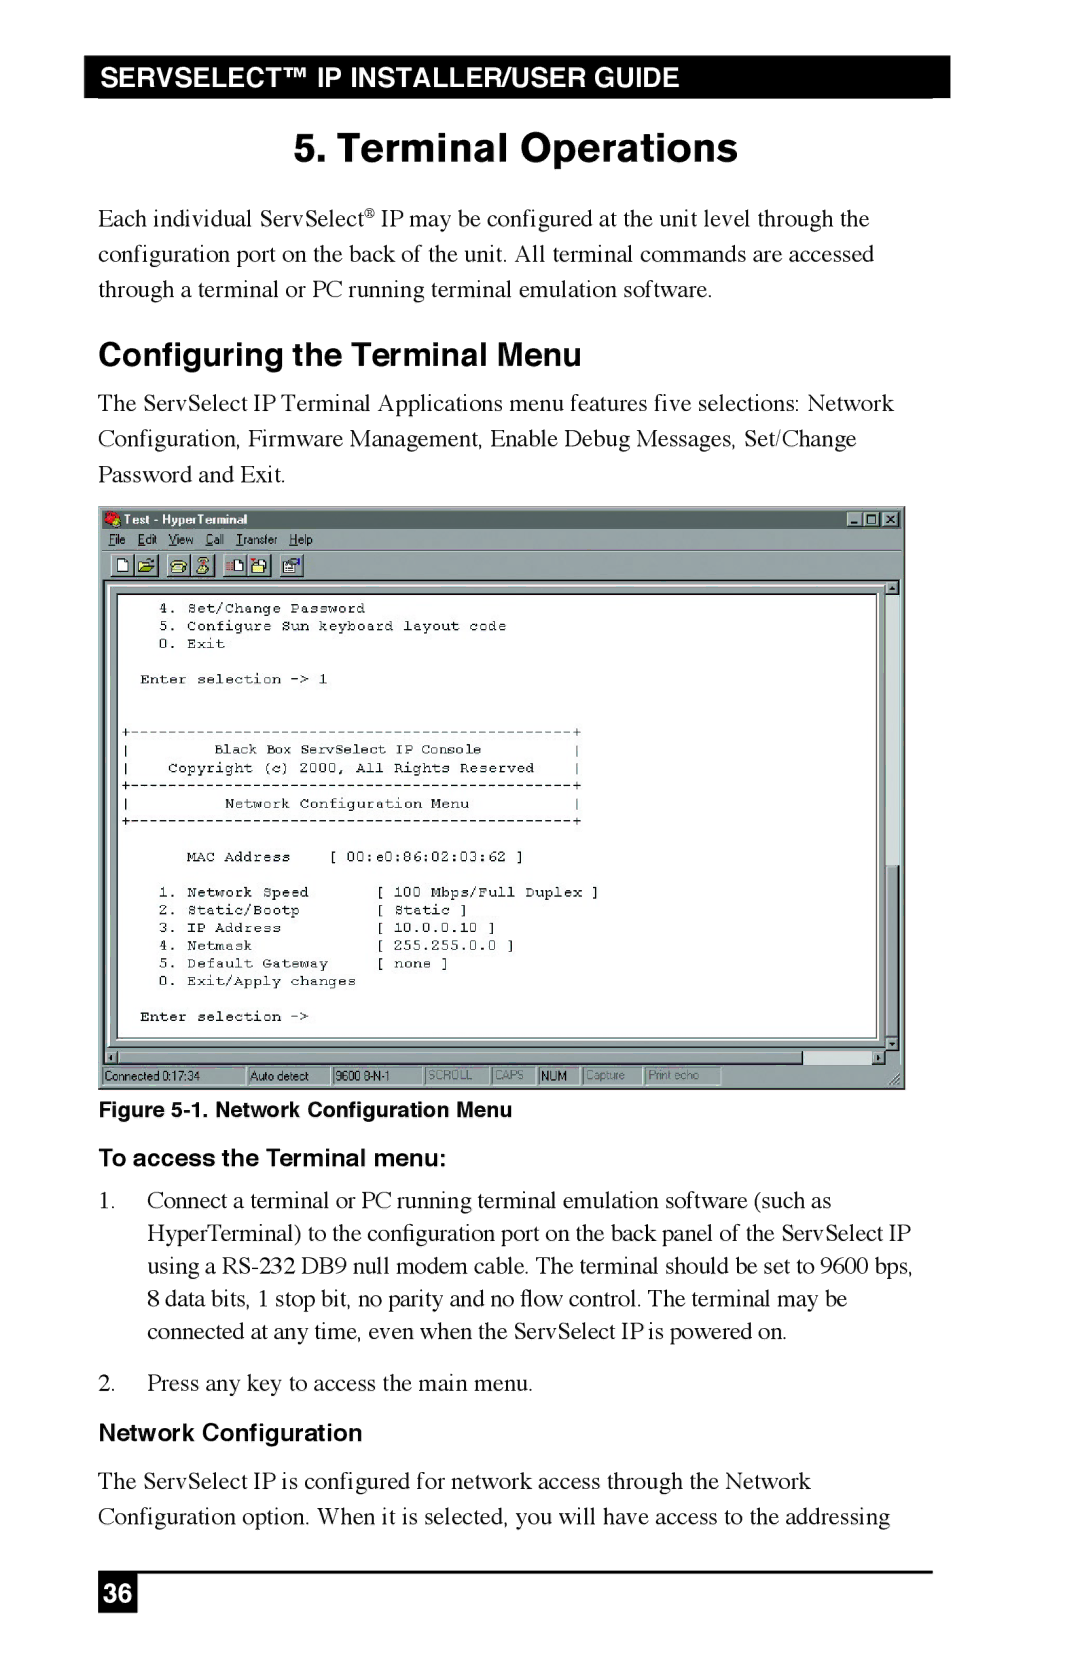 Black Box KV120A Terminal Operations, Configuring the Terminal Menu, To access the Terminal menu, Network Configuration 